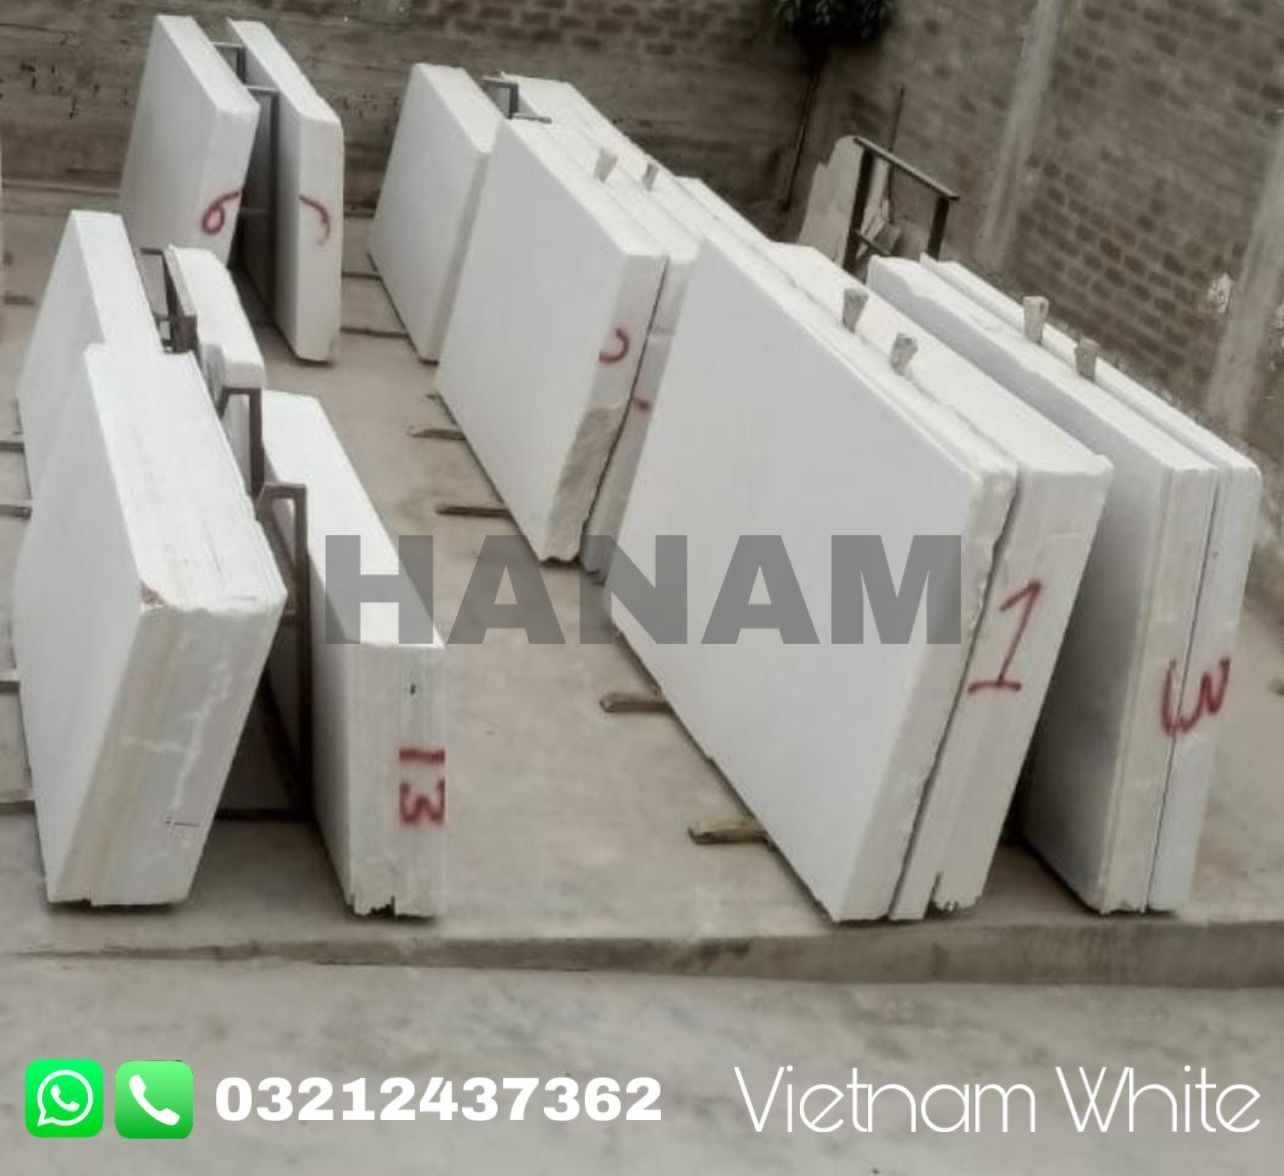 vietnam-white-marble-pakistan-0321-2437362-big-1